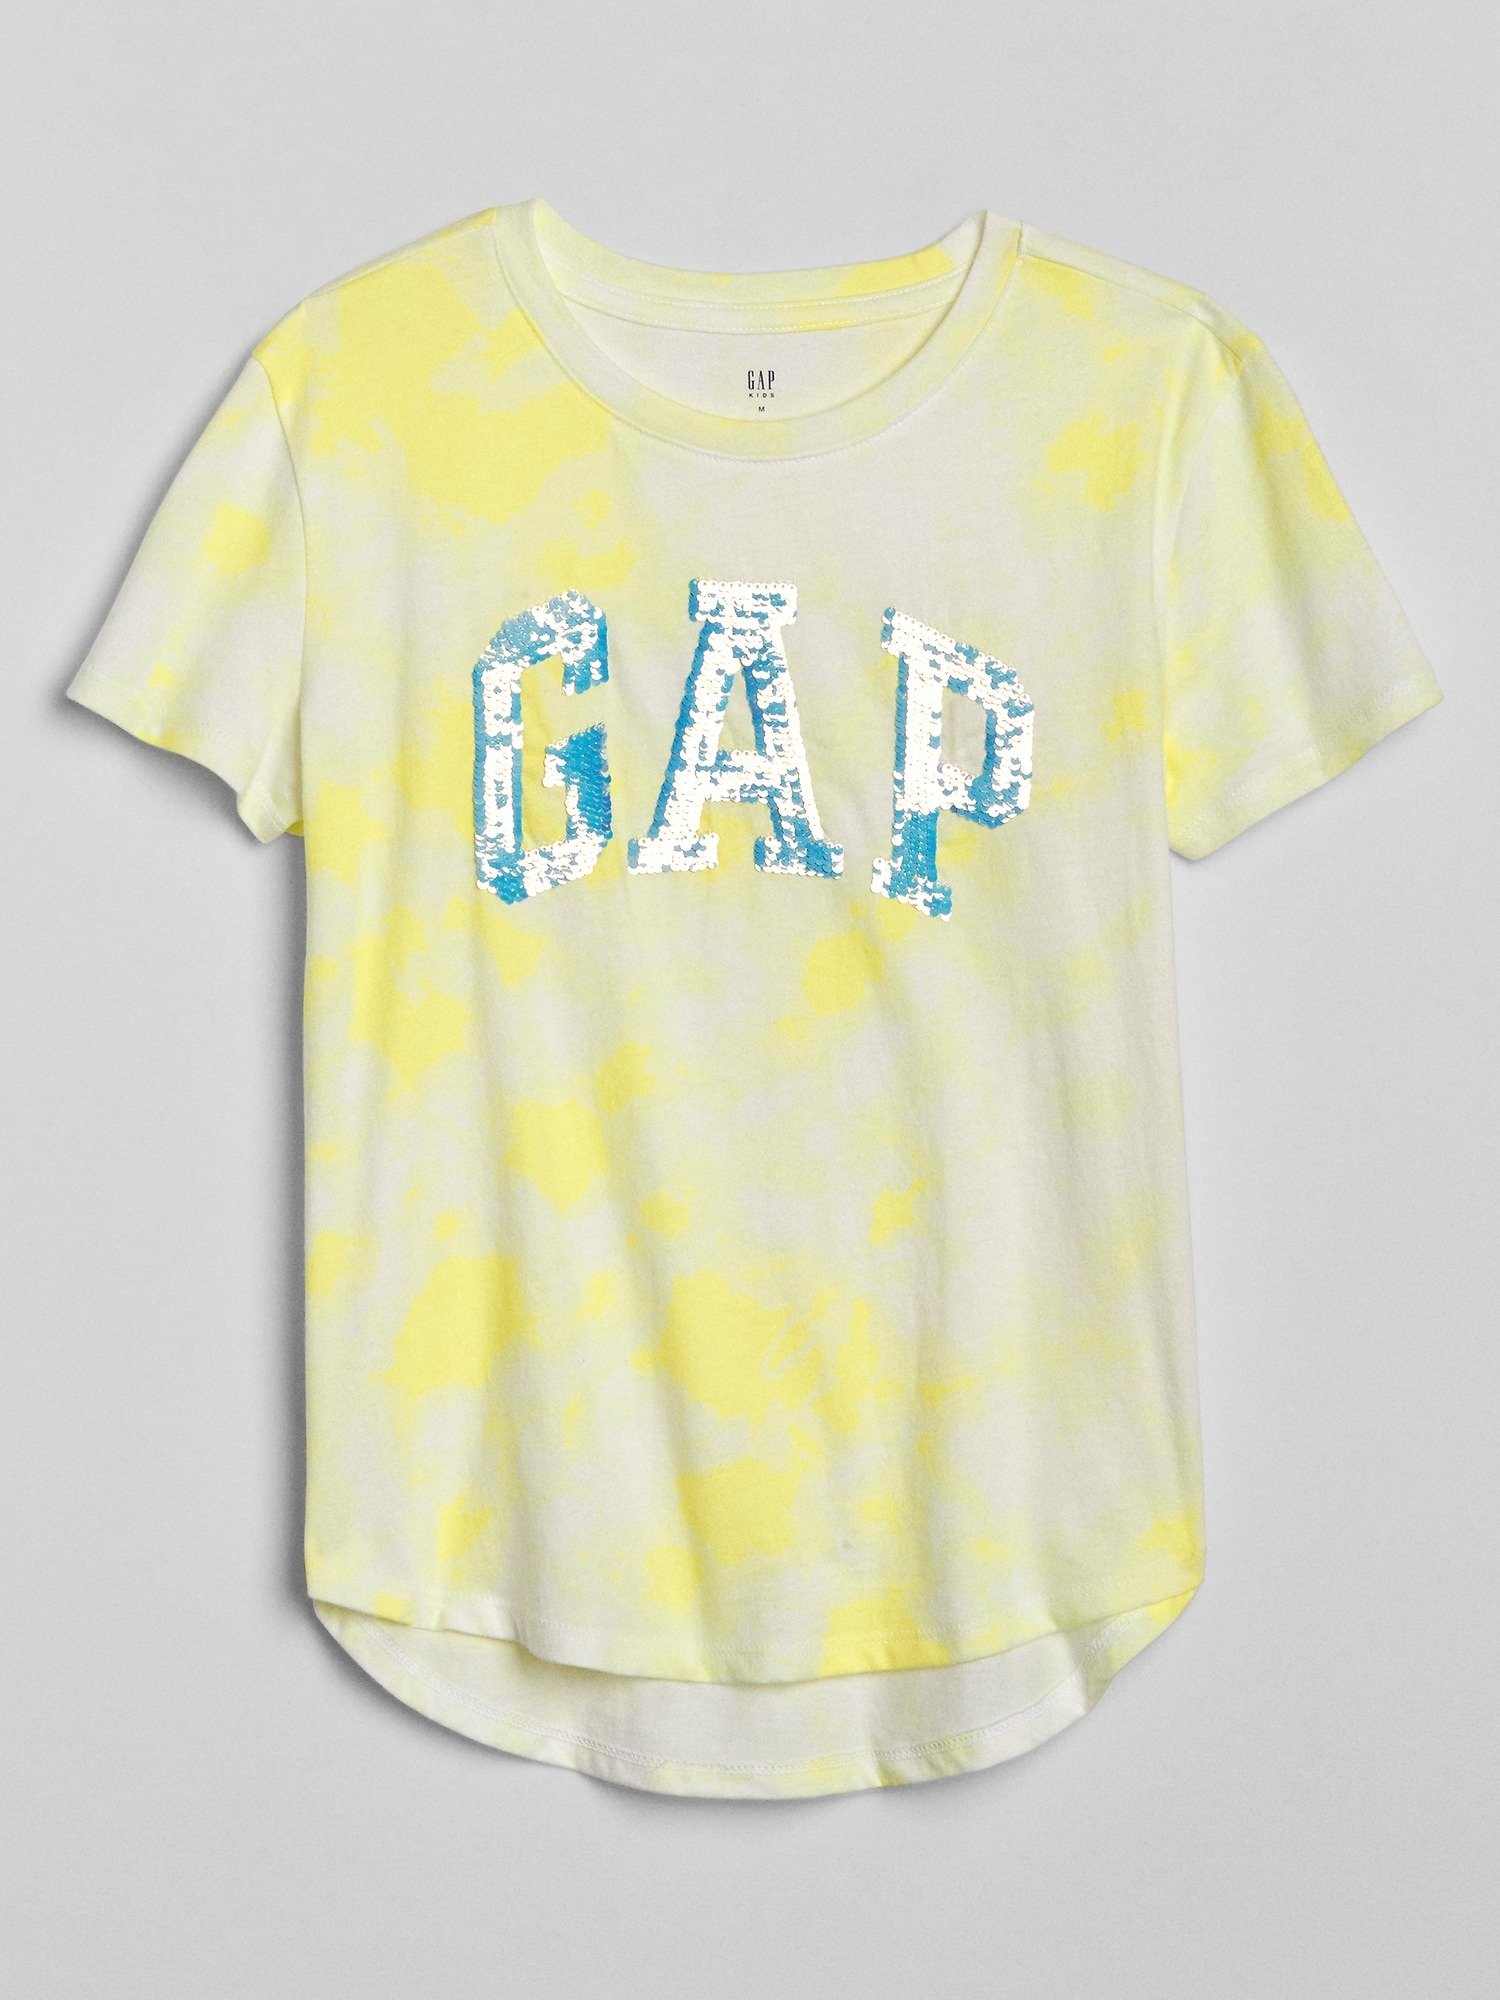 Gap Logo Pullu T-Shirt product image